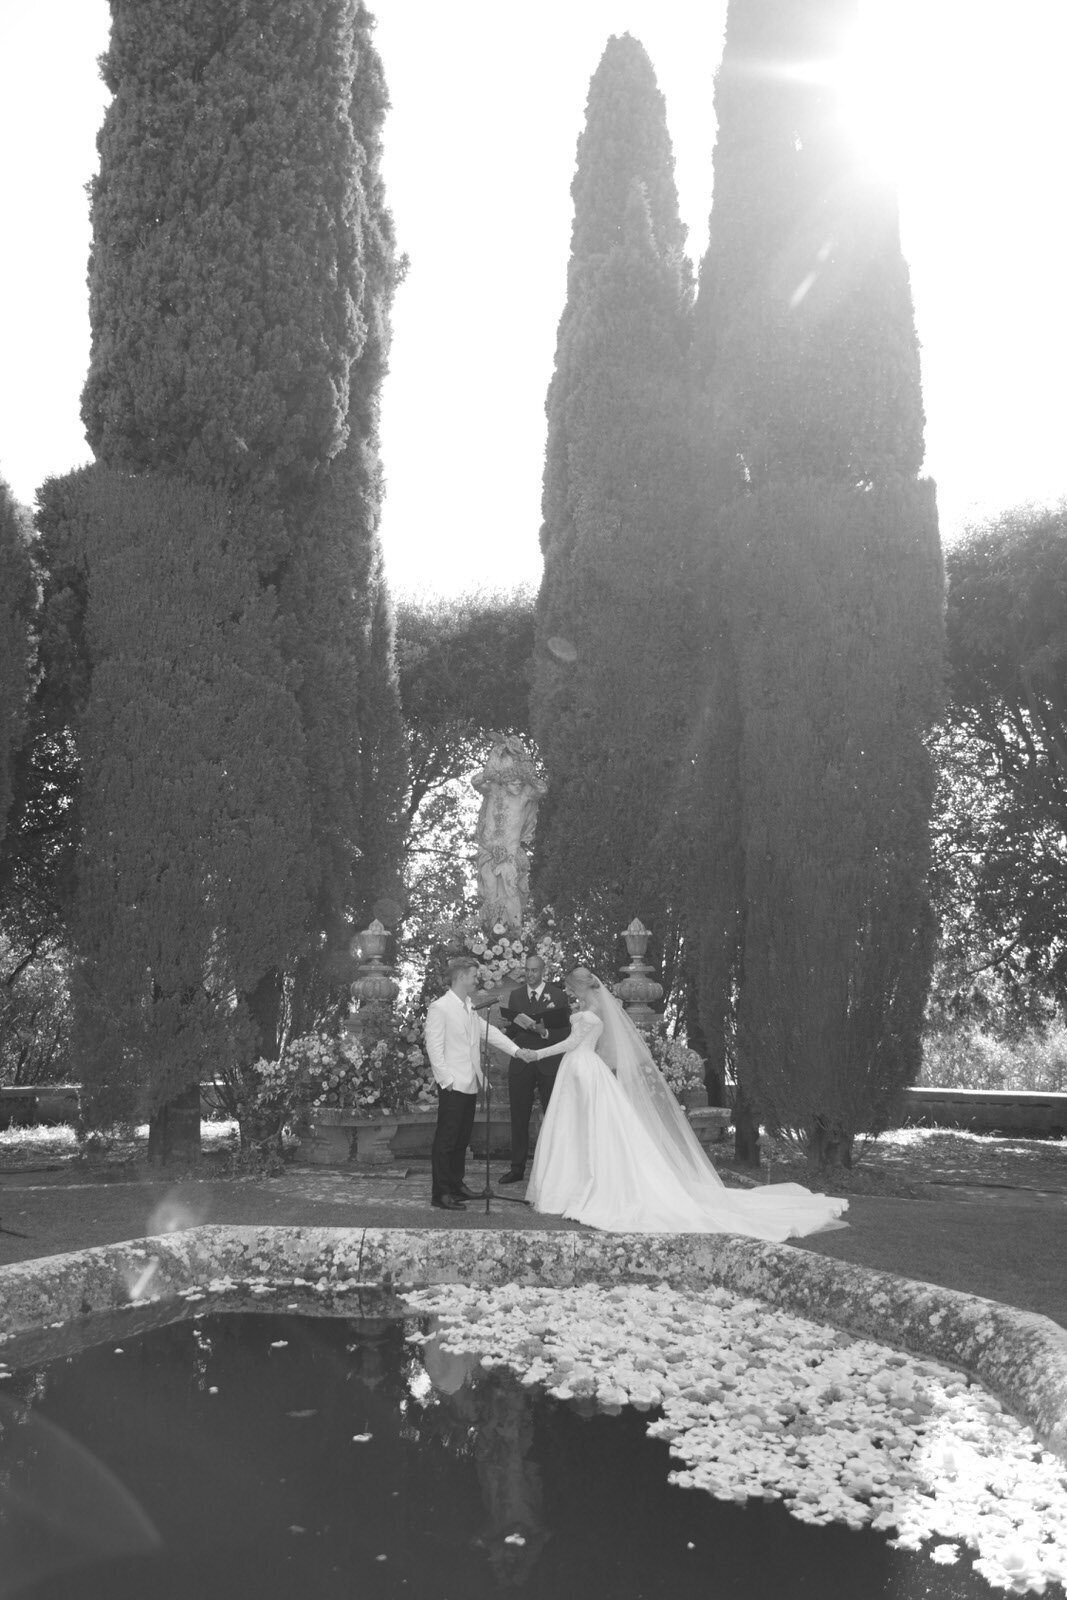 Flora_And_Grace_Tuscany_La_Foce_Editorial_Wedding_Film_Photographer-46